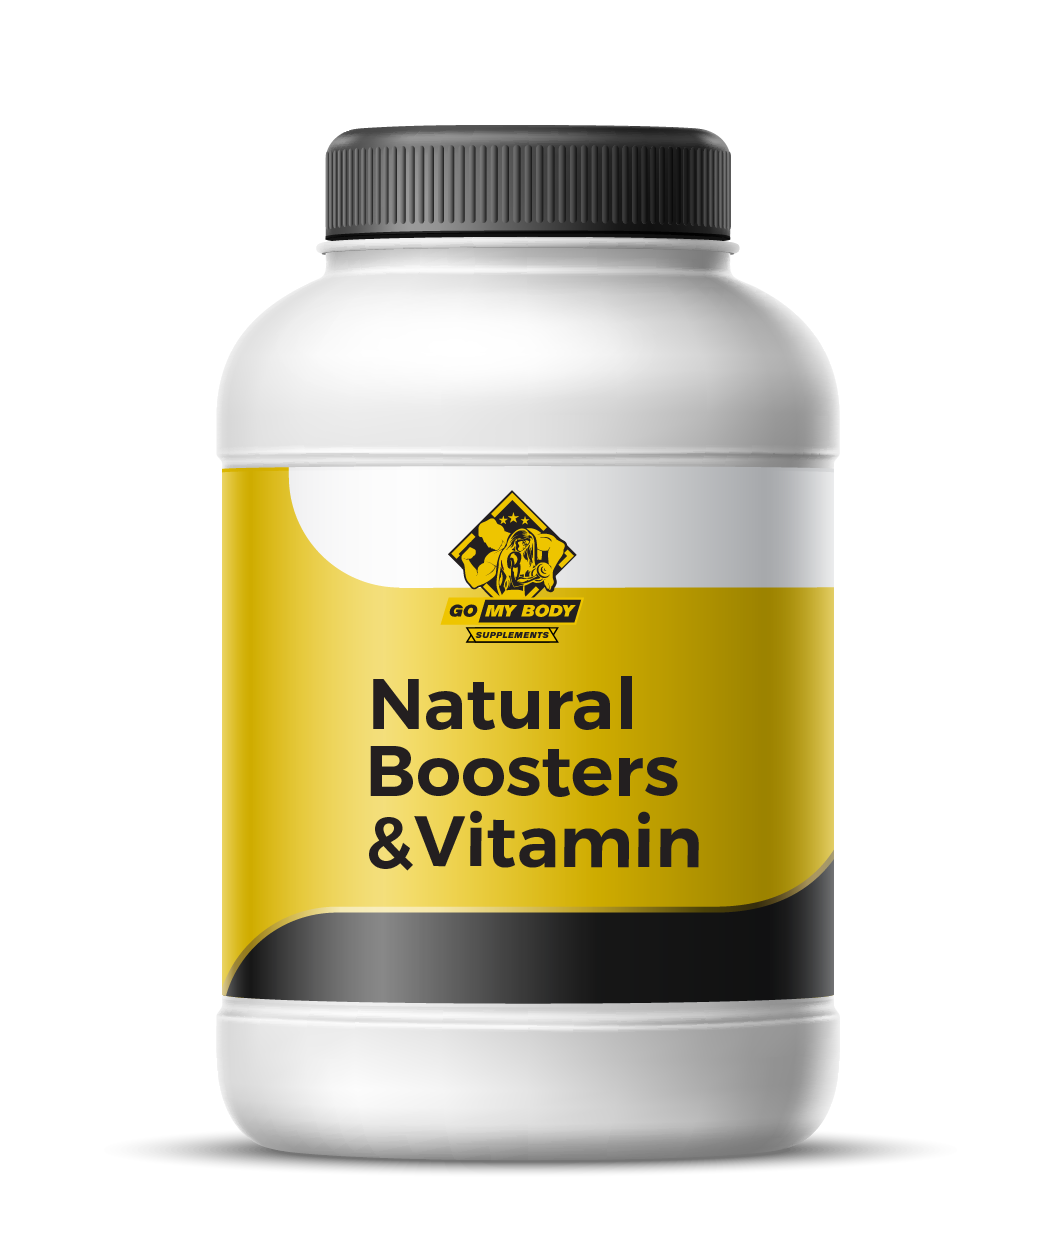 Natural Boosters & Vitamins